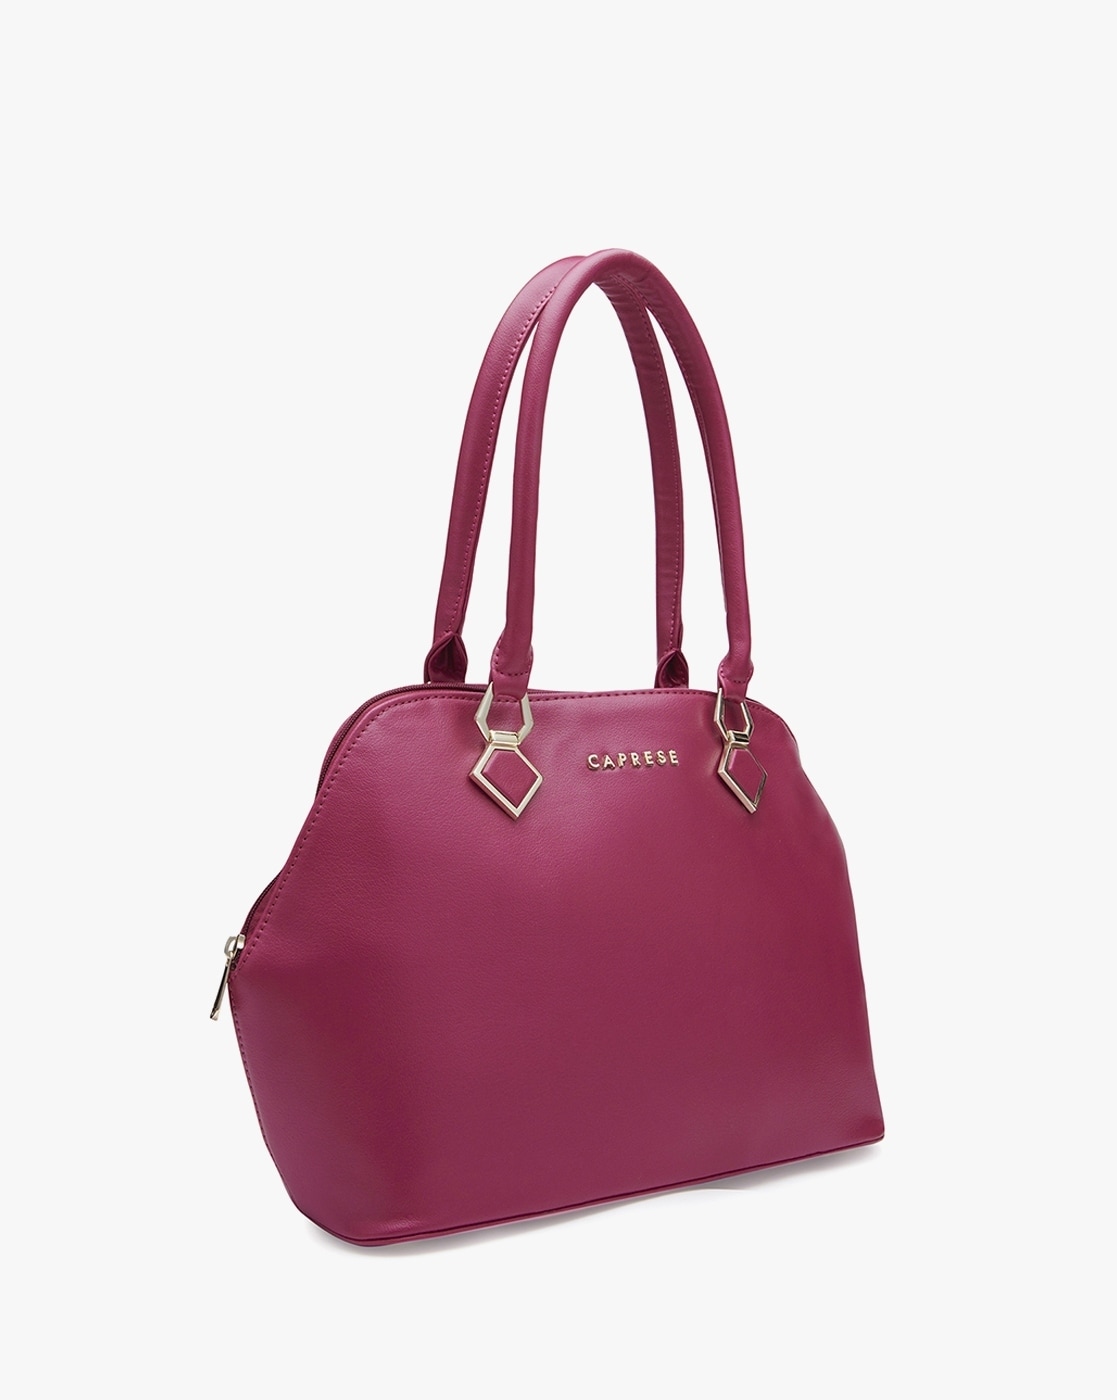 Handbags | Caprese New Tags Beige Handbag | Freeup